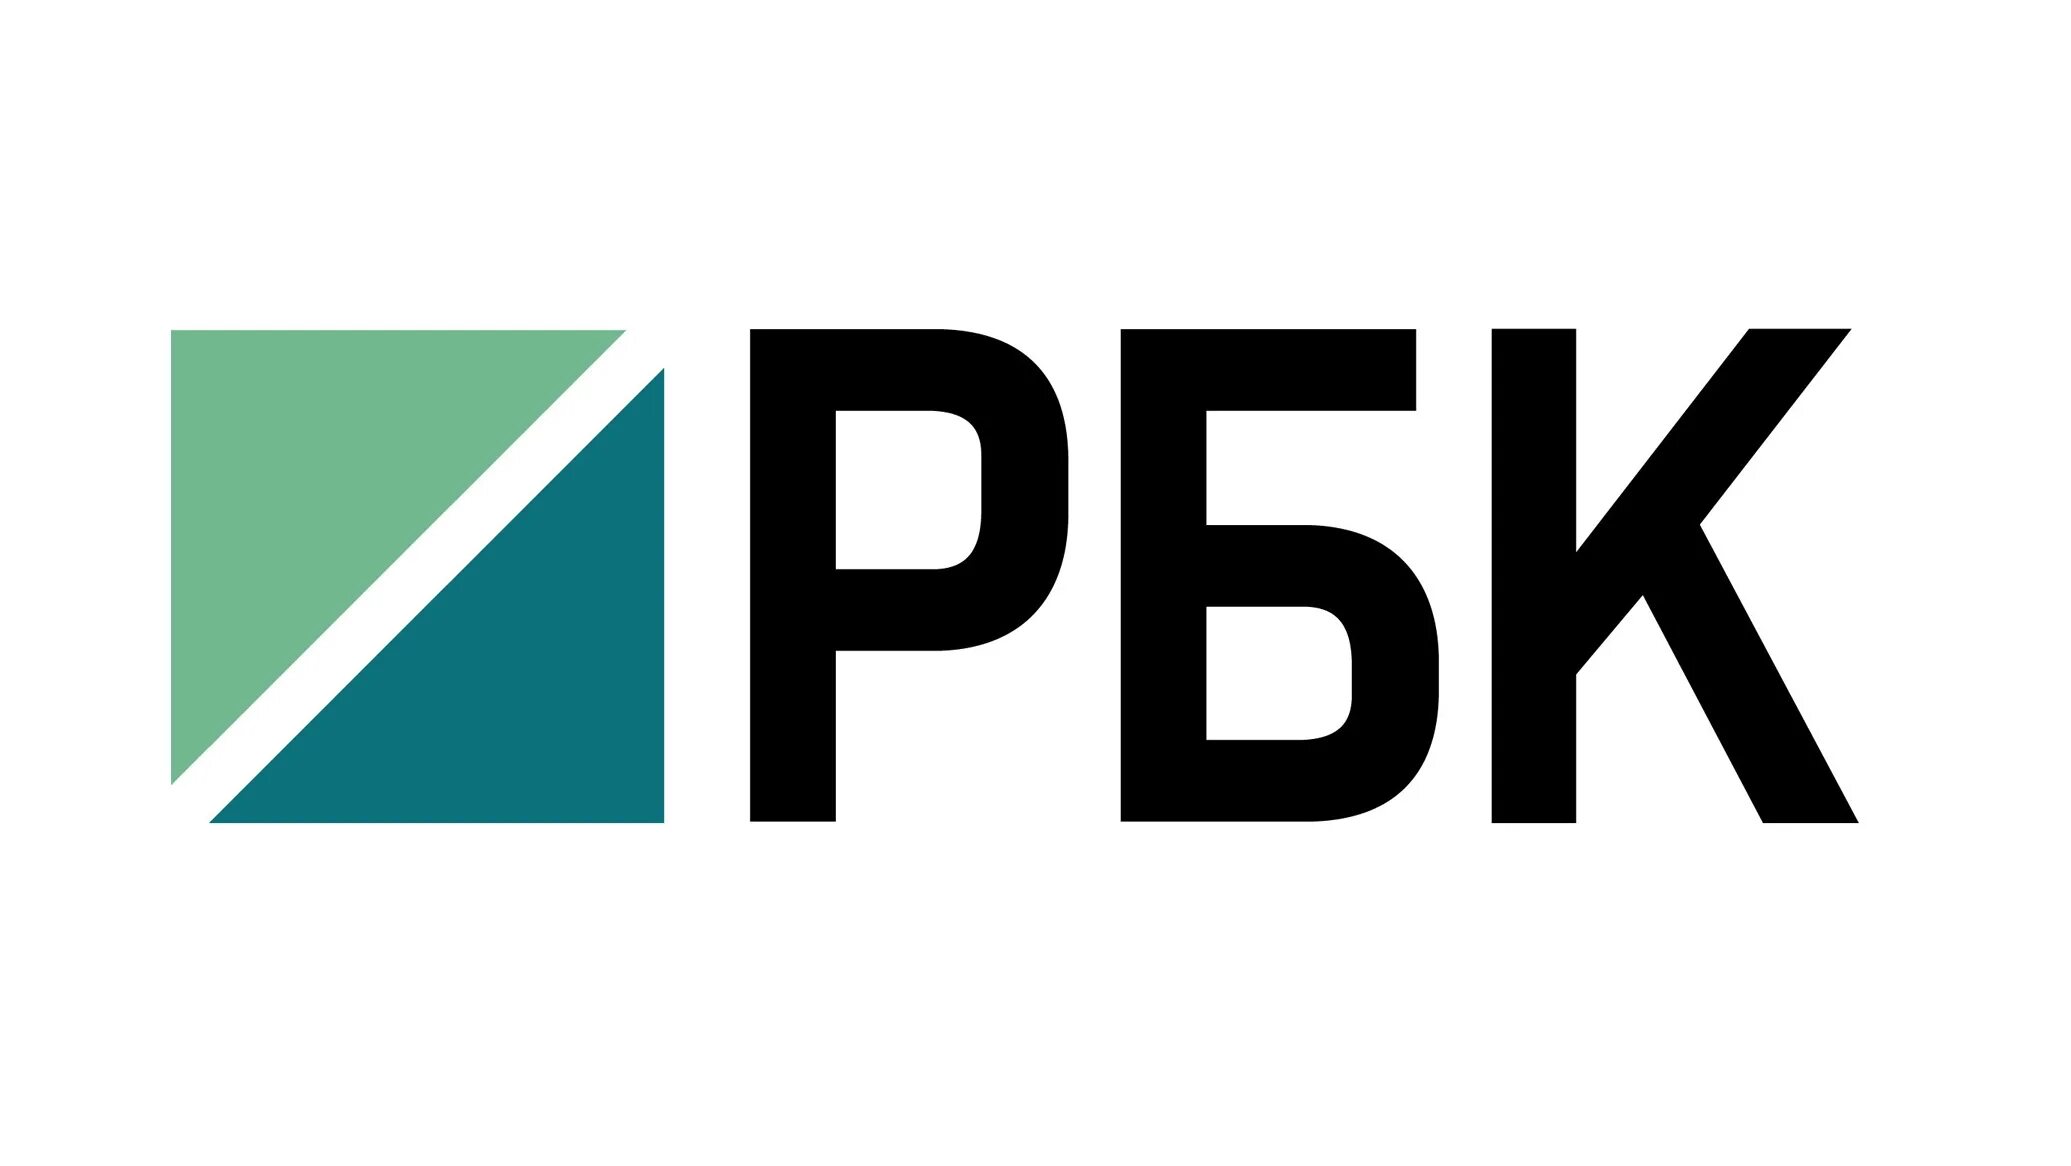 RBC логотип. Телеканал РБК логотип. РБК тренды логотип. РБК Новосибирск.